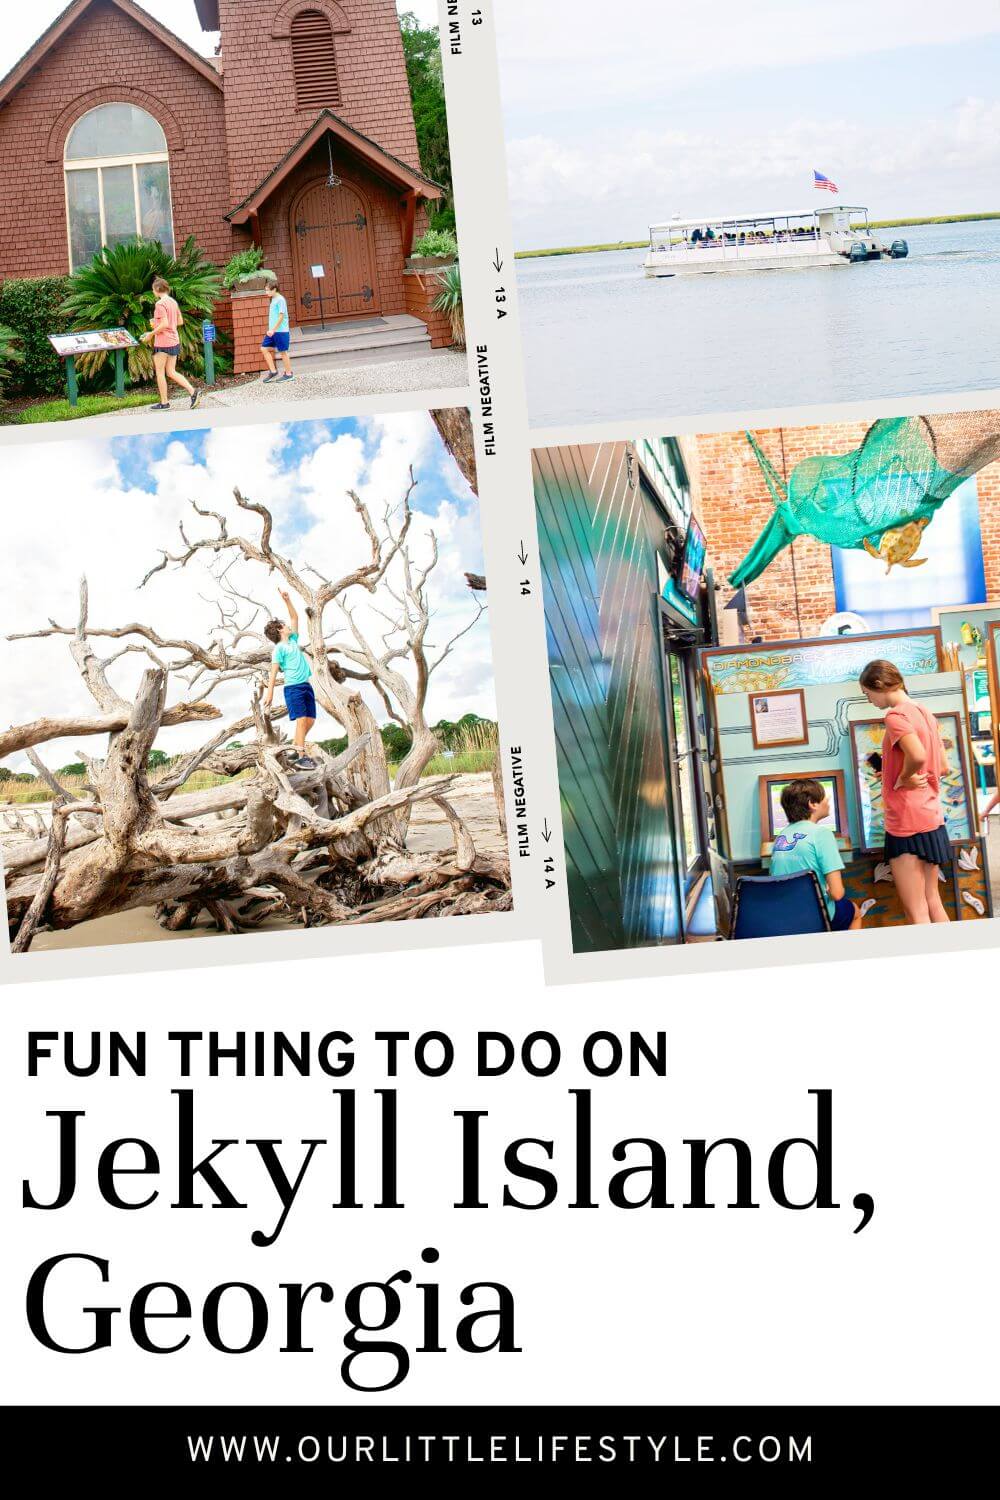 Fun Things to do with kids on Jekyll Island